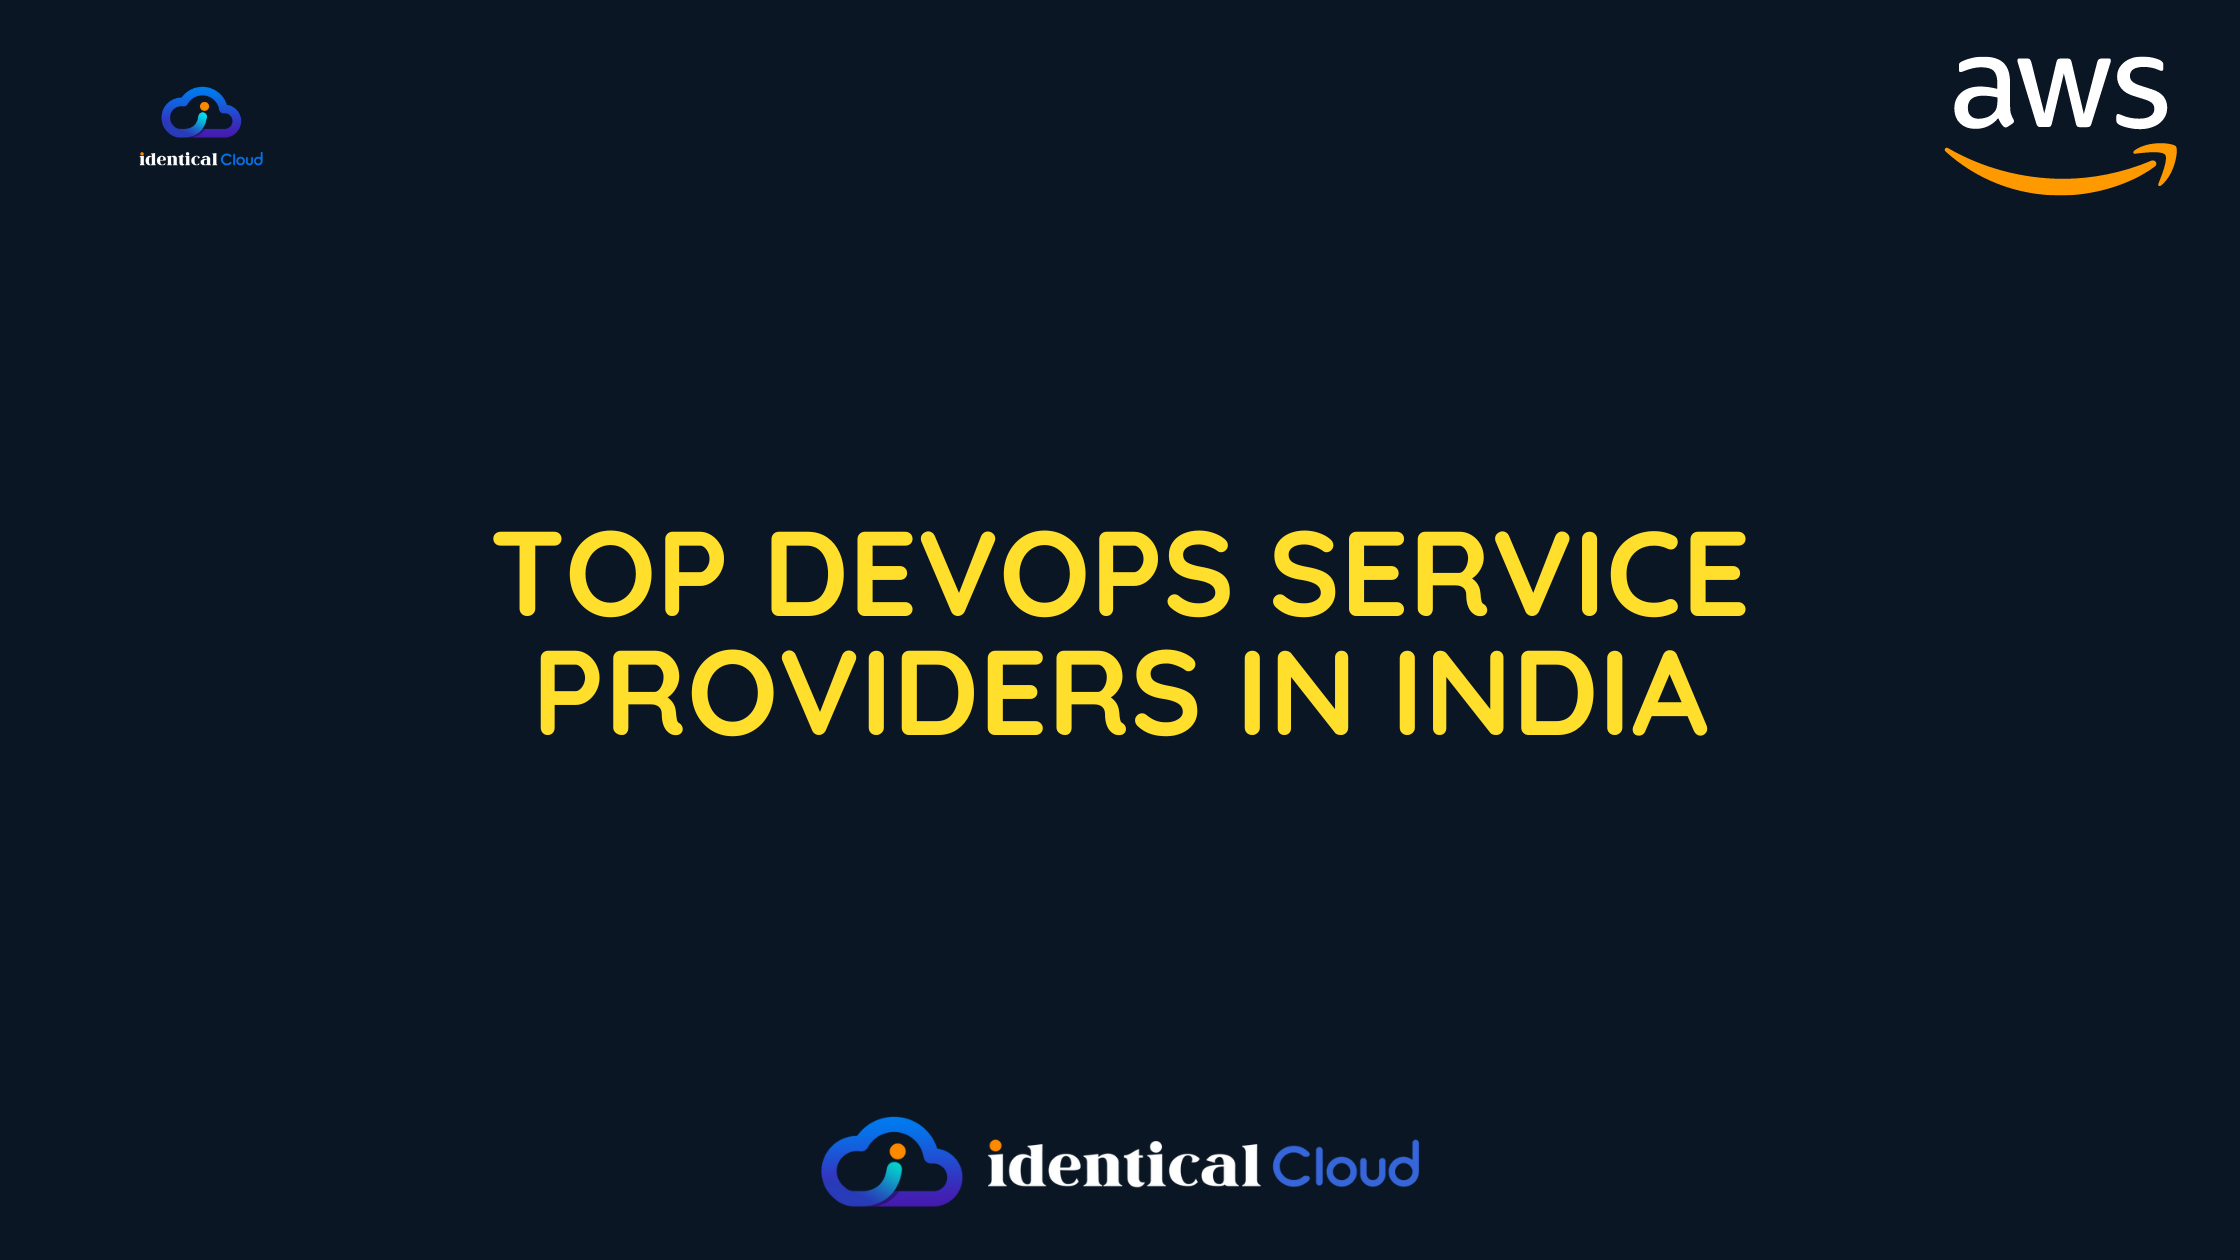 Top DevOps service providers in India - identicalcloud.com